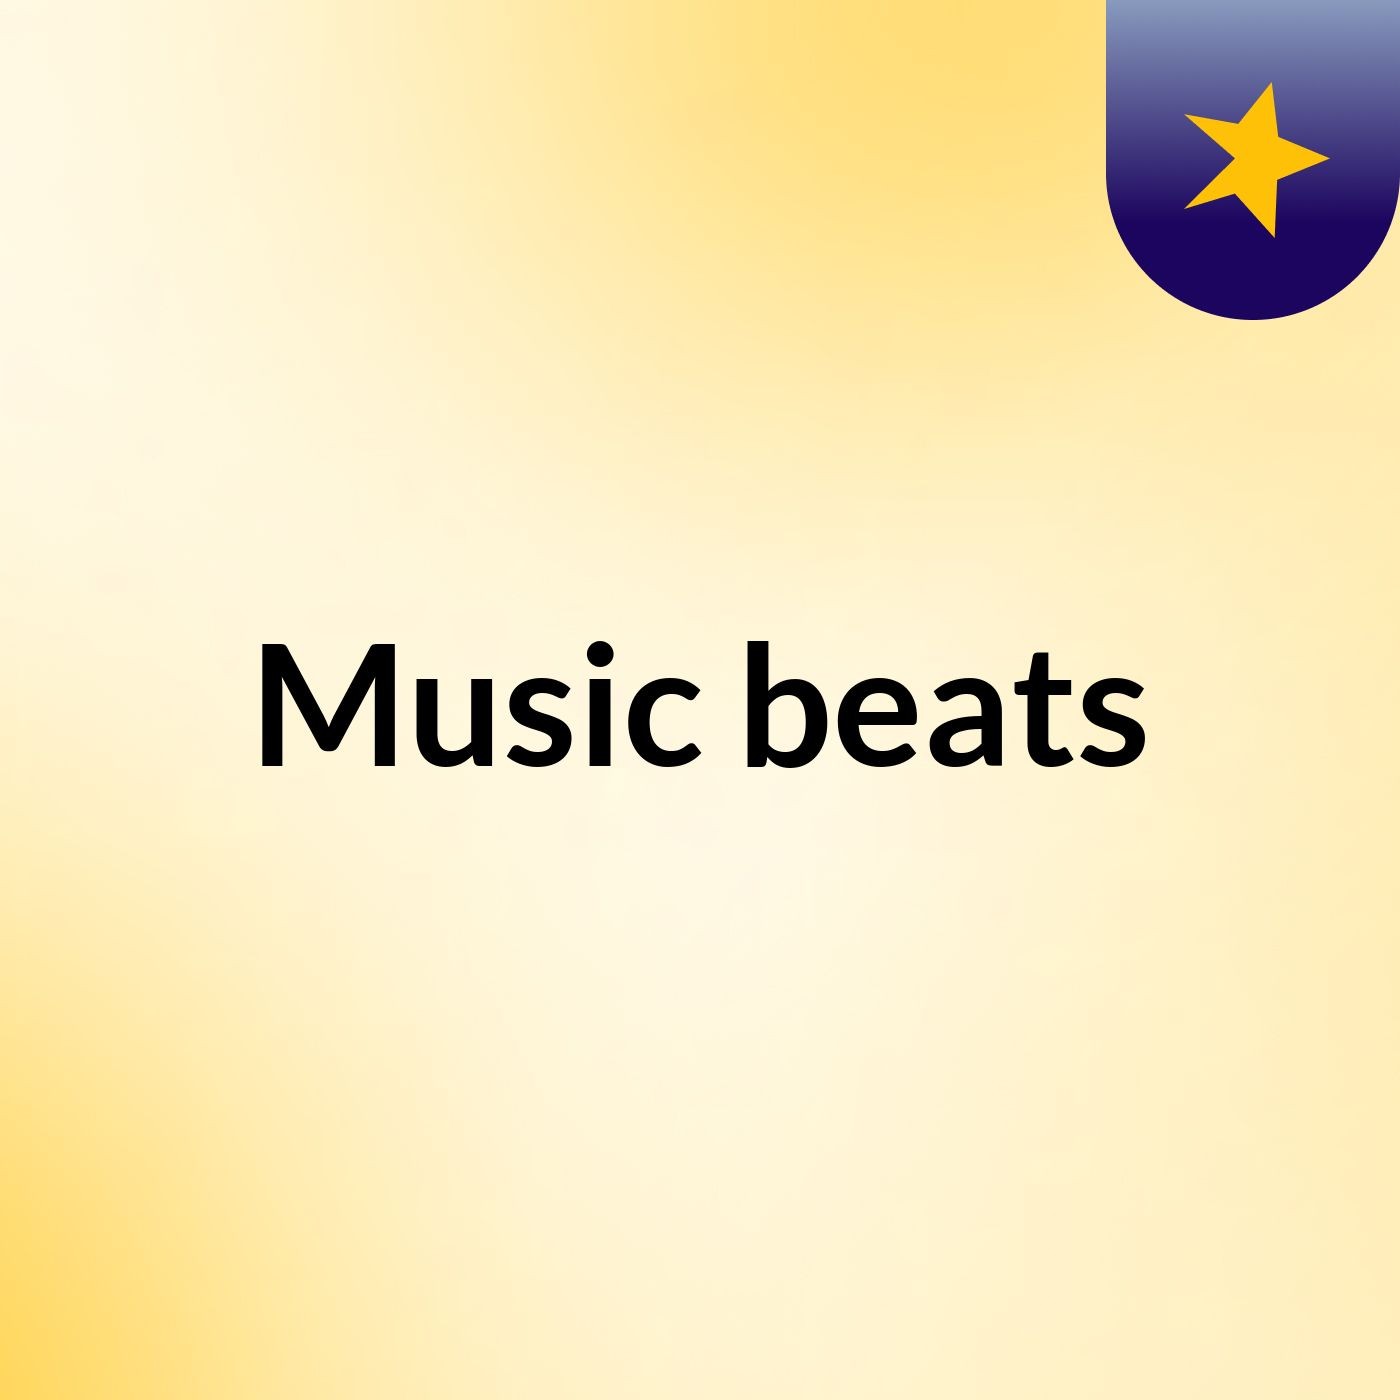 Music beats